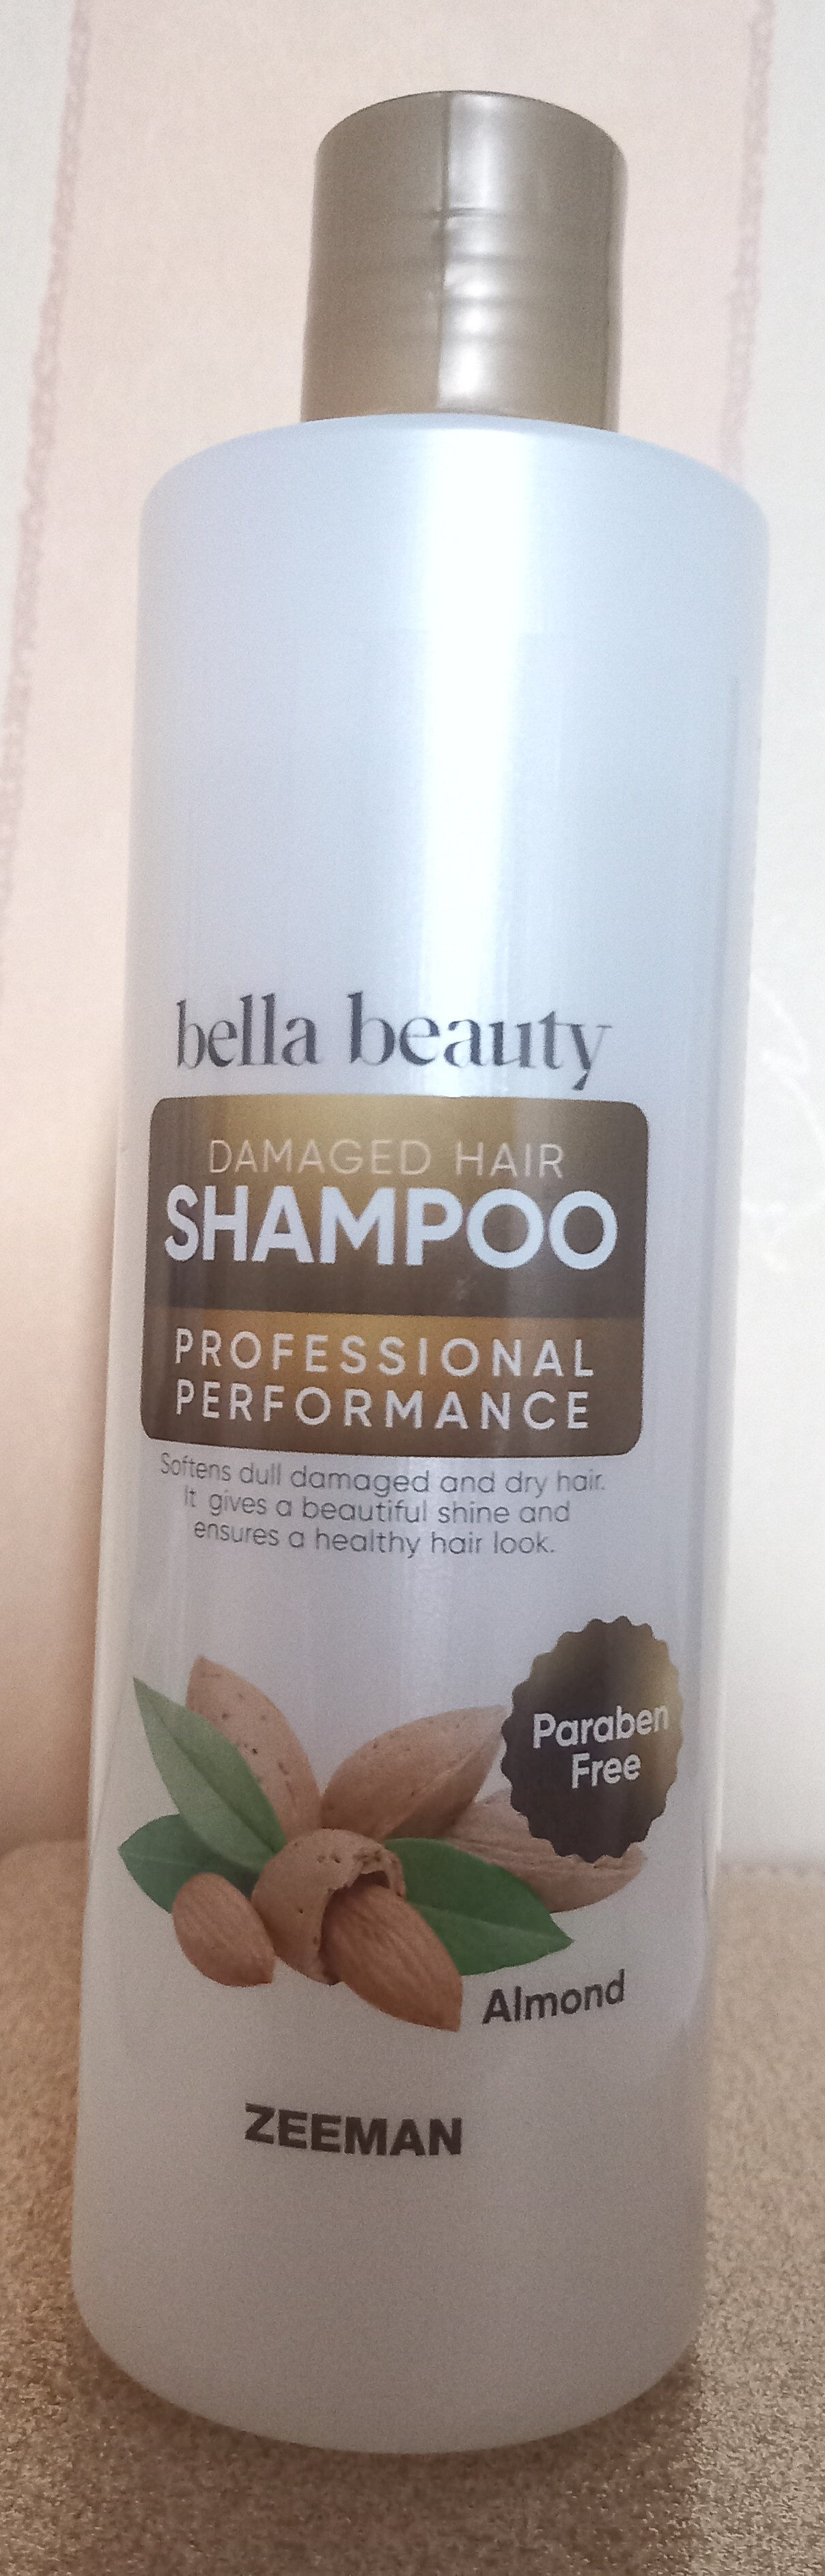 Bella Beauty DAMAGED HAIR SHAMPOO PROFESSIONNAL PERFORMANCE - Produto - fr